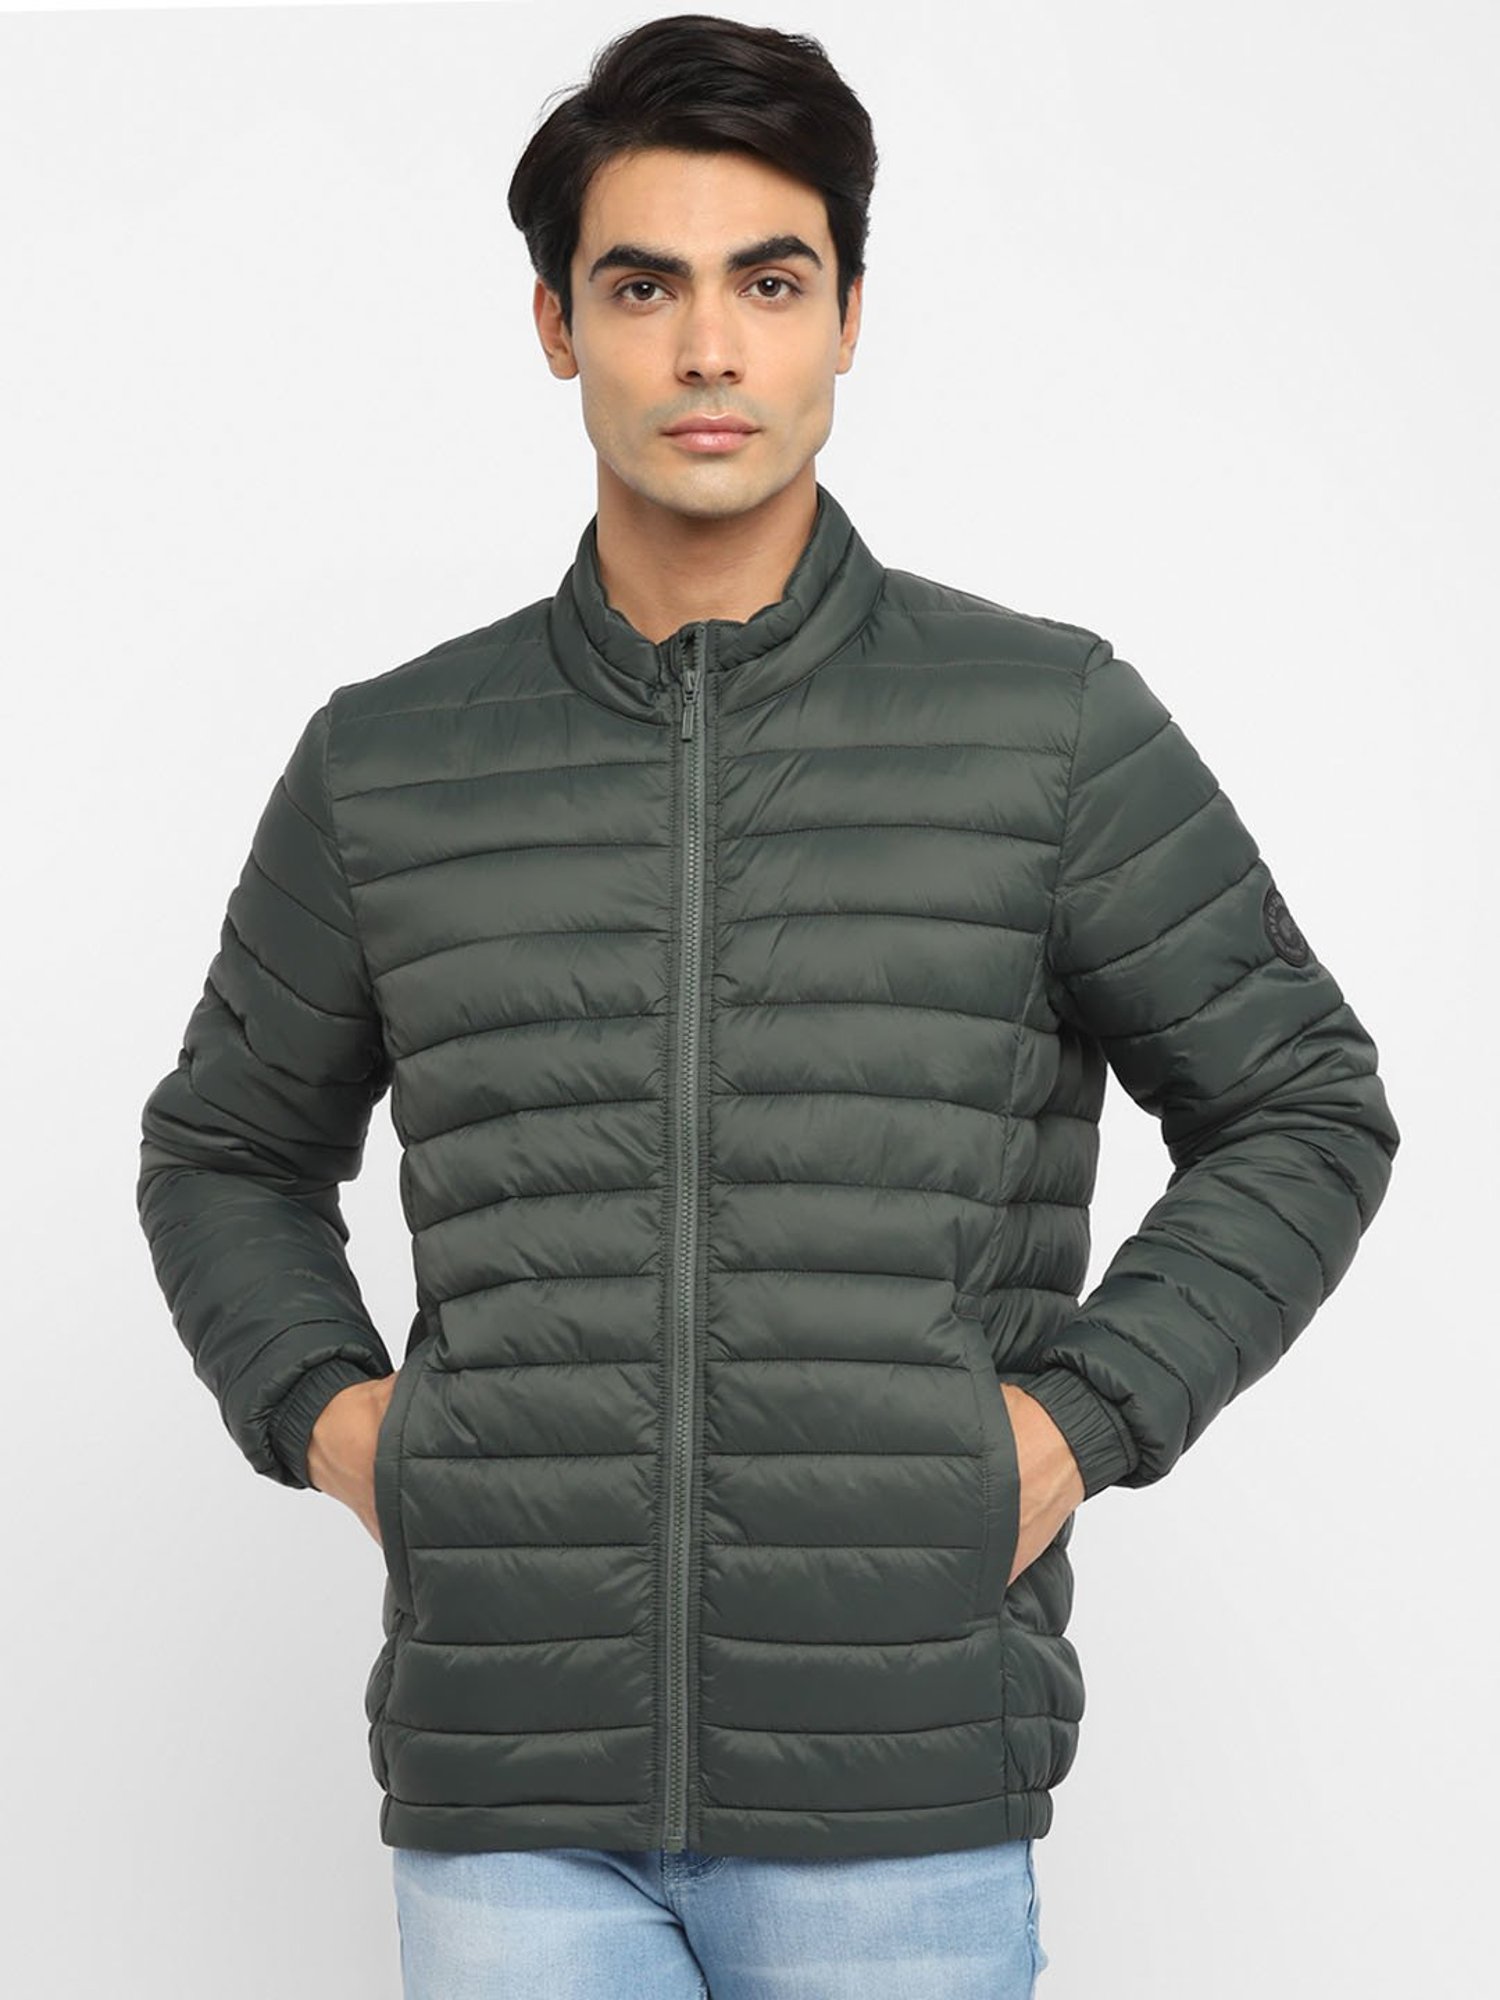 Buy Leather Retail Black Regular Fit Jacket for Men Online @ Tata CLiQ